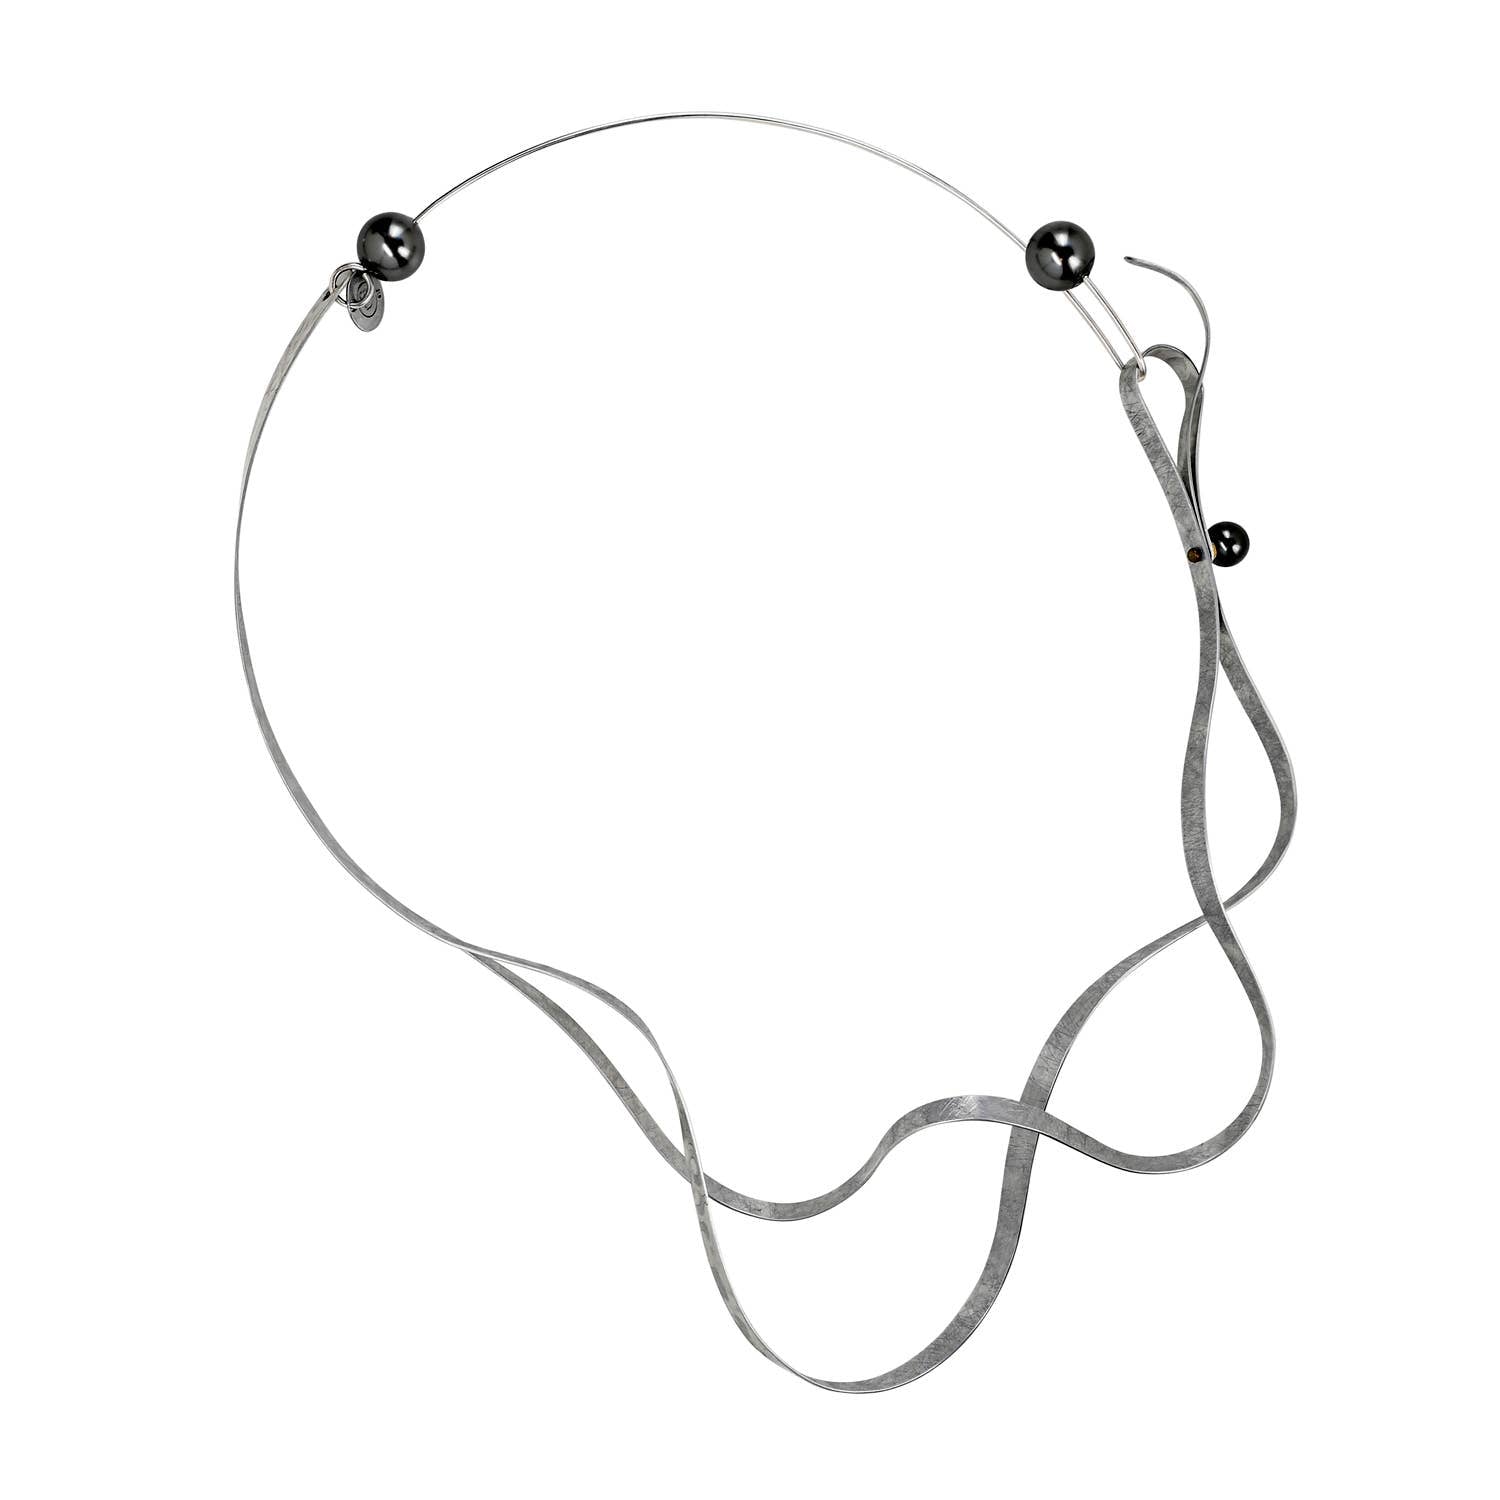 Statement Wearable Sculpture Necklace. Sound Waves Design